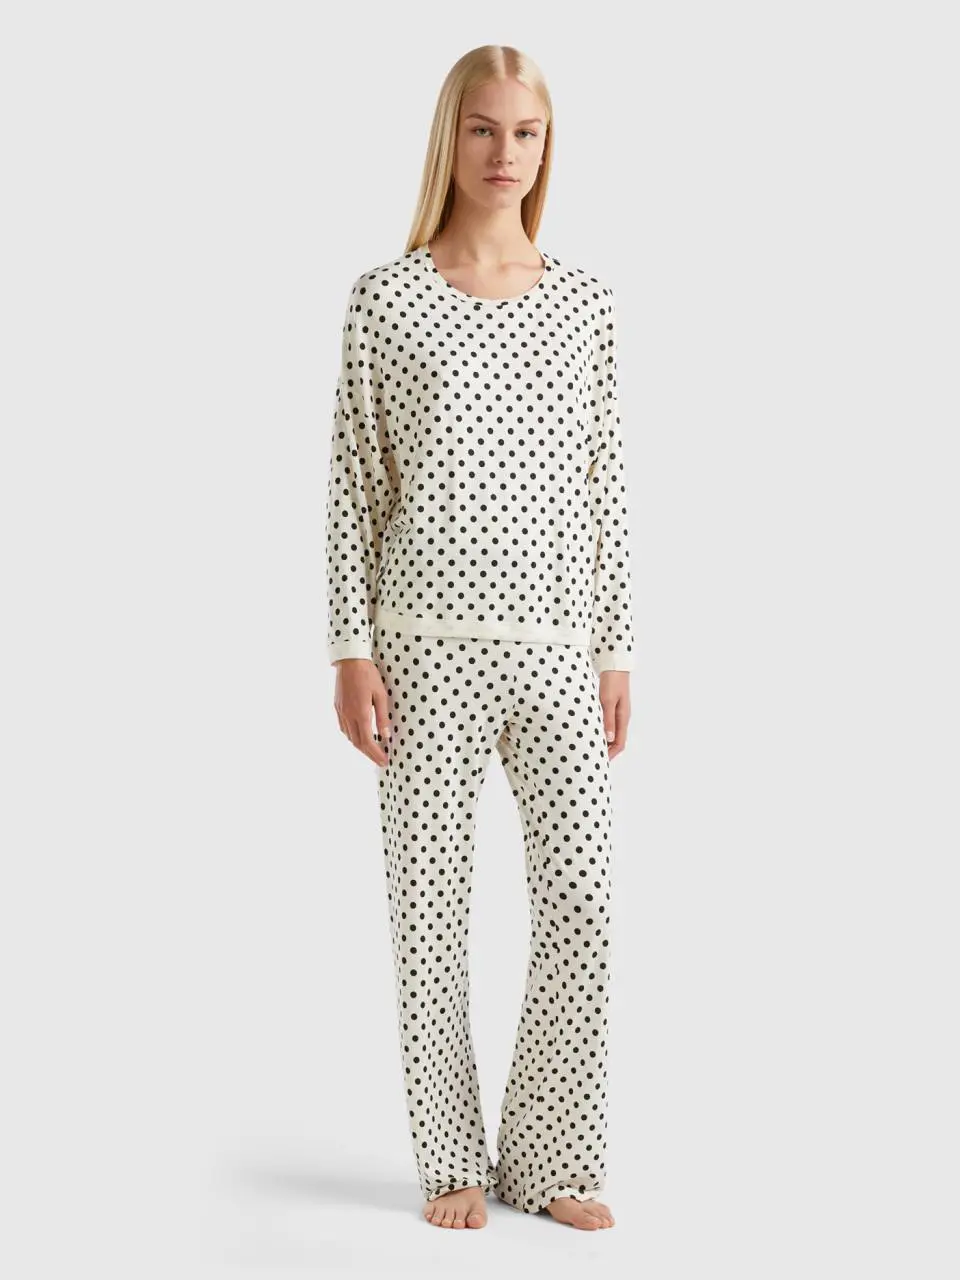 Benetton long polka dot pyjamas. 1